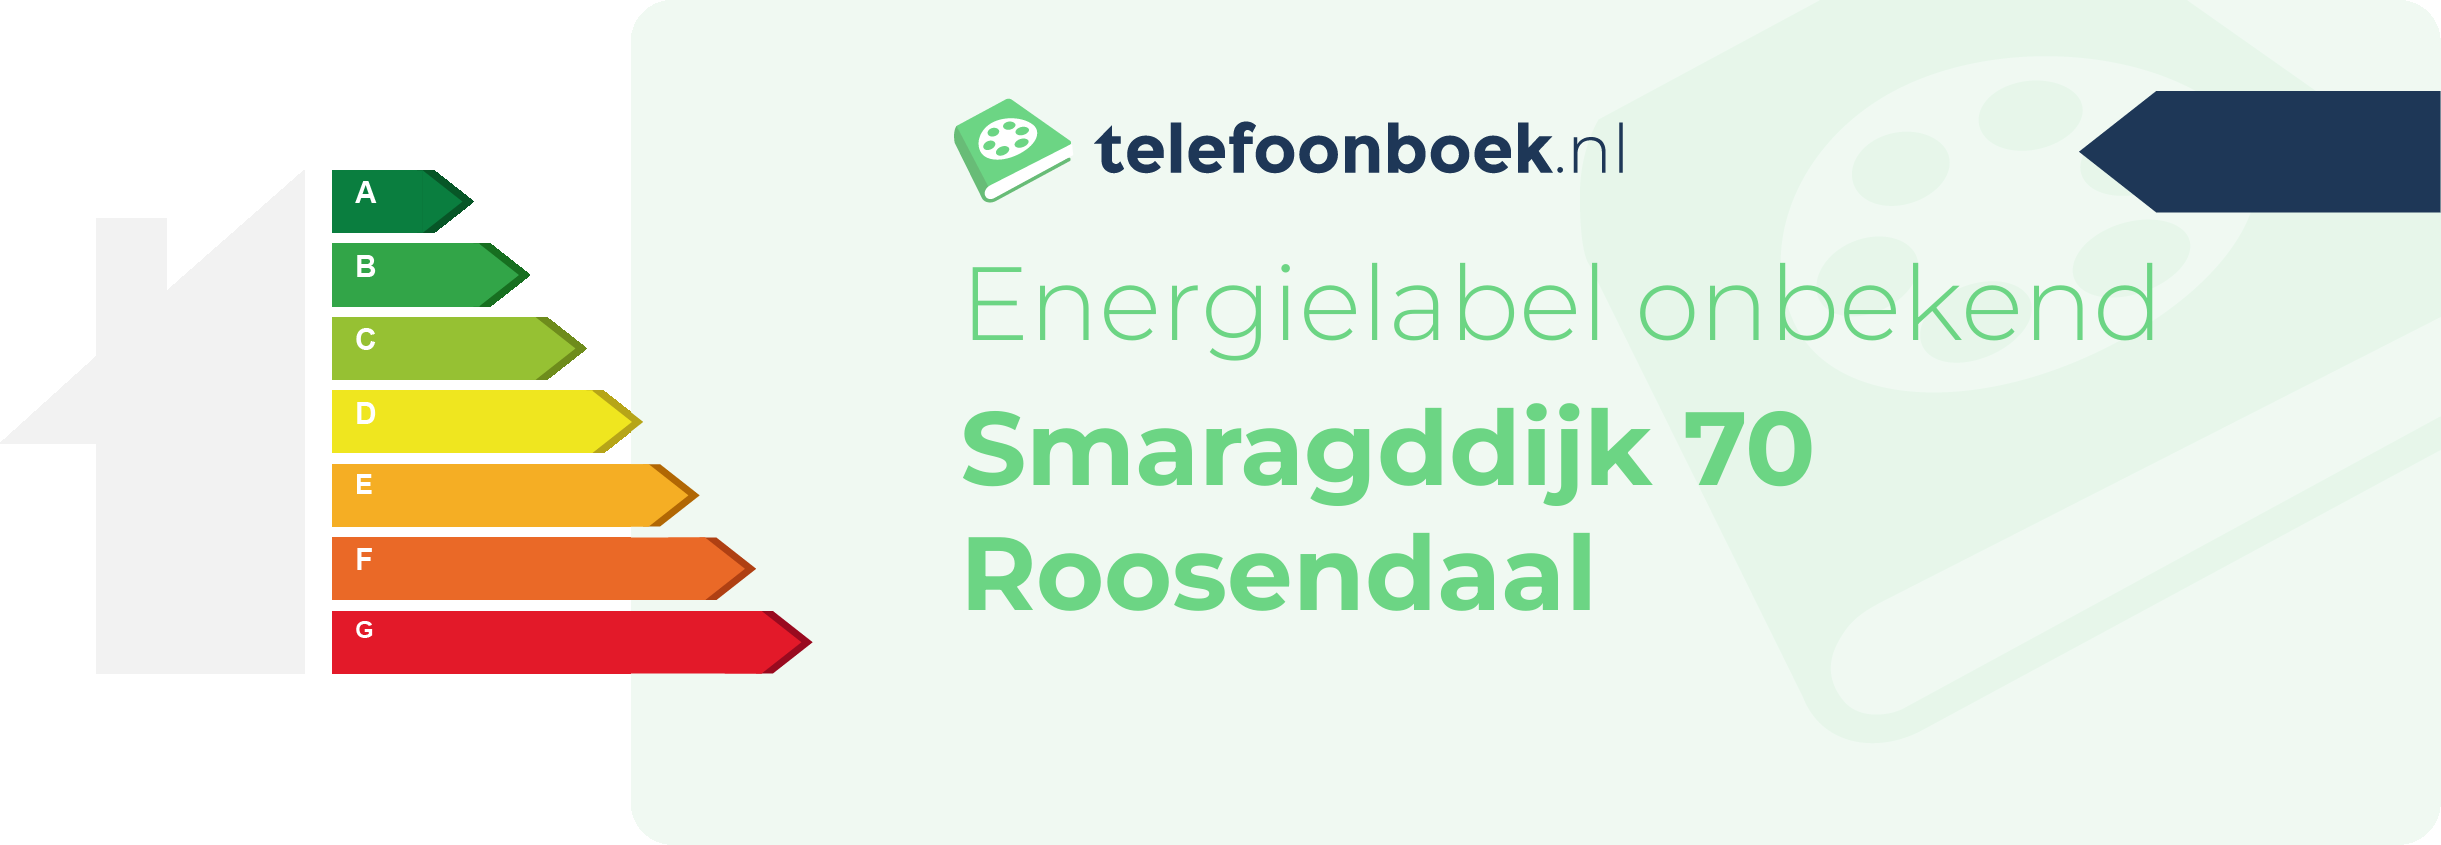 Energielabel Smaragddijk 70 Roosendaal